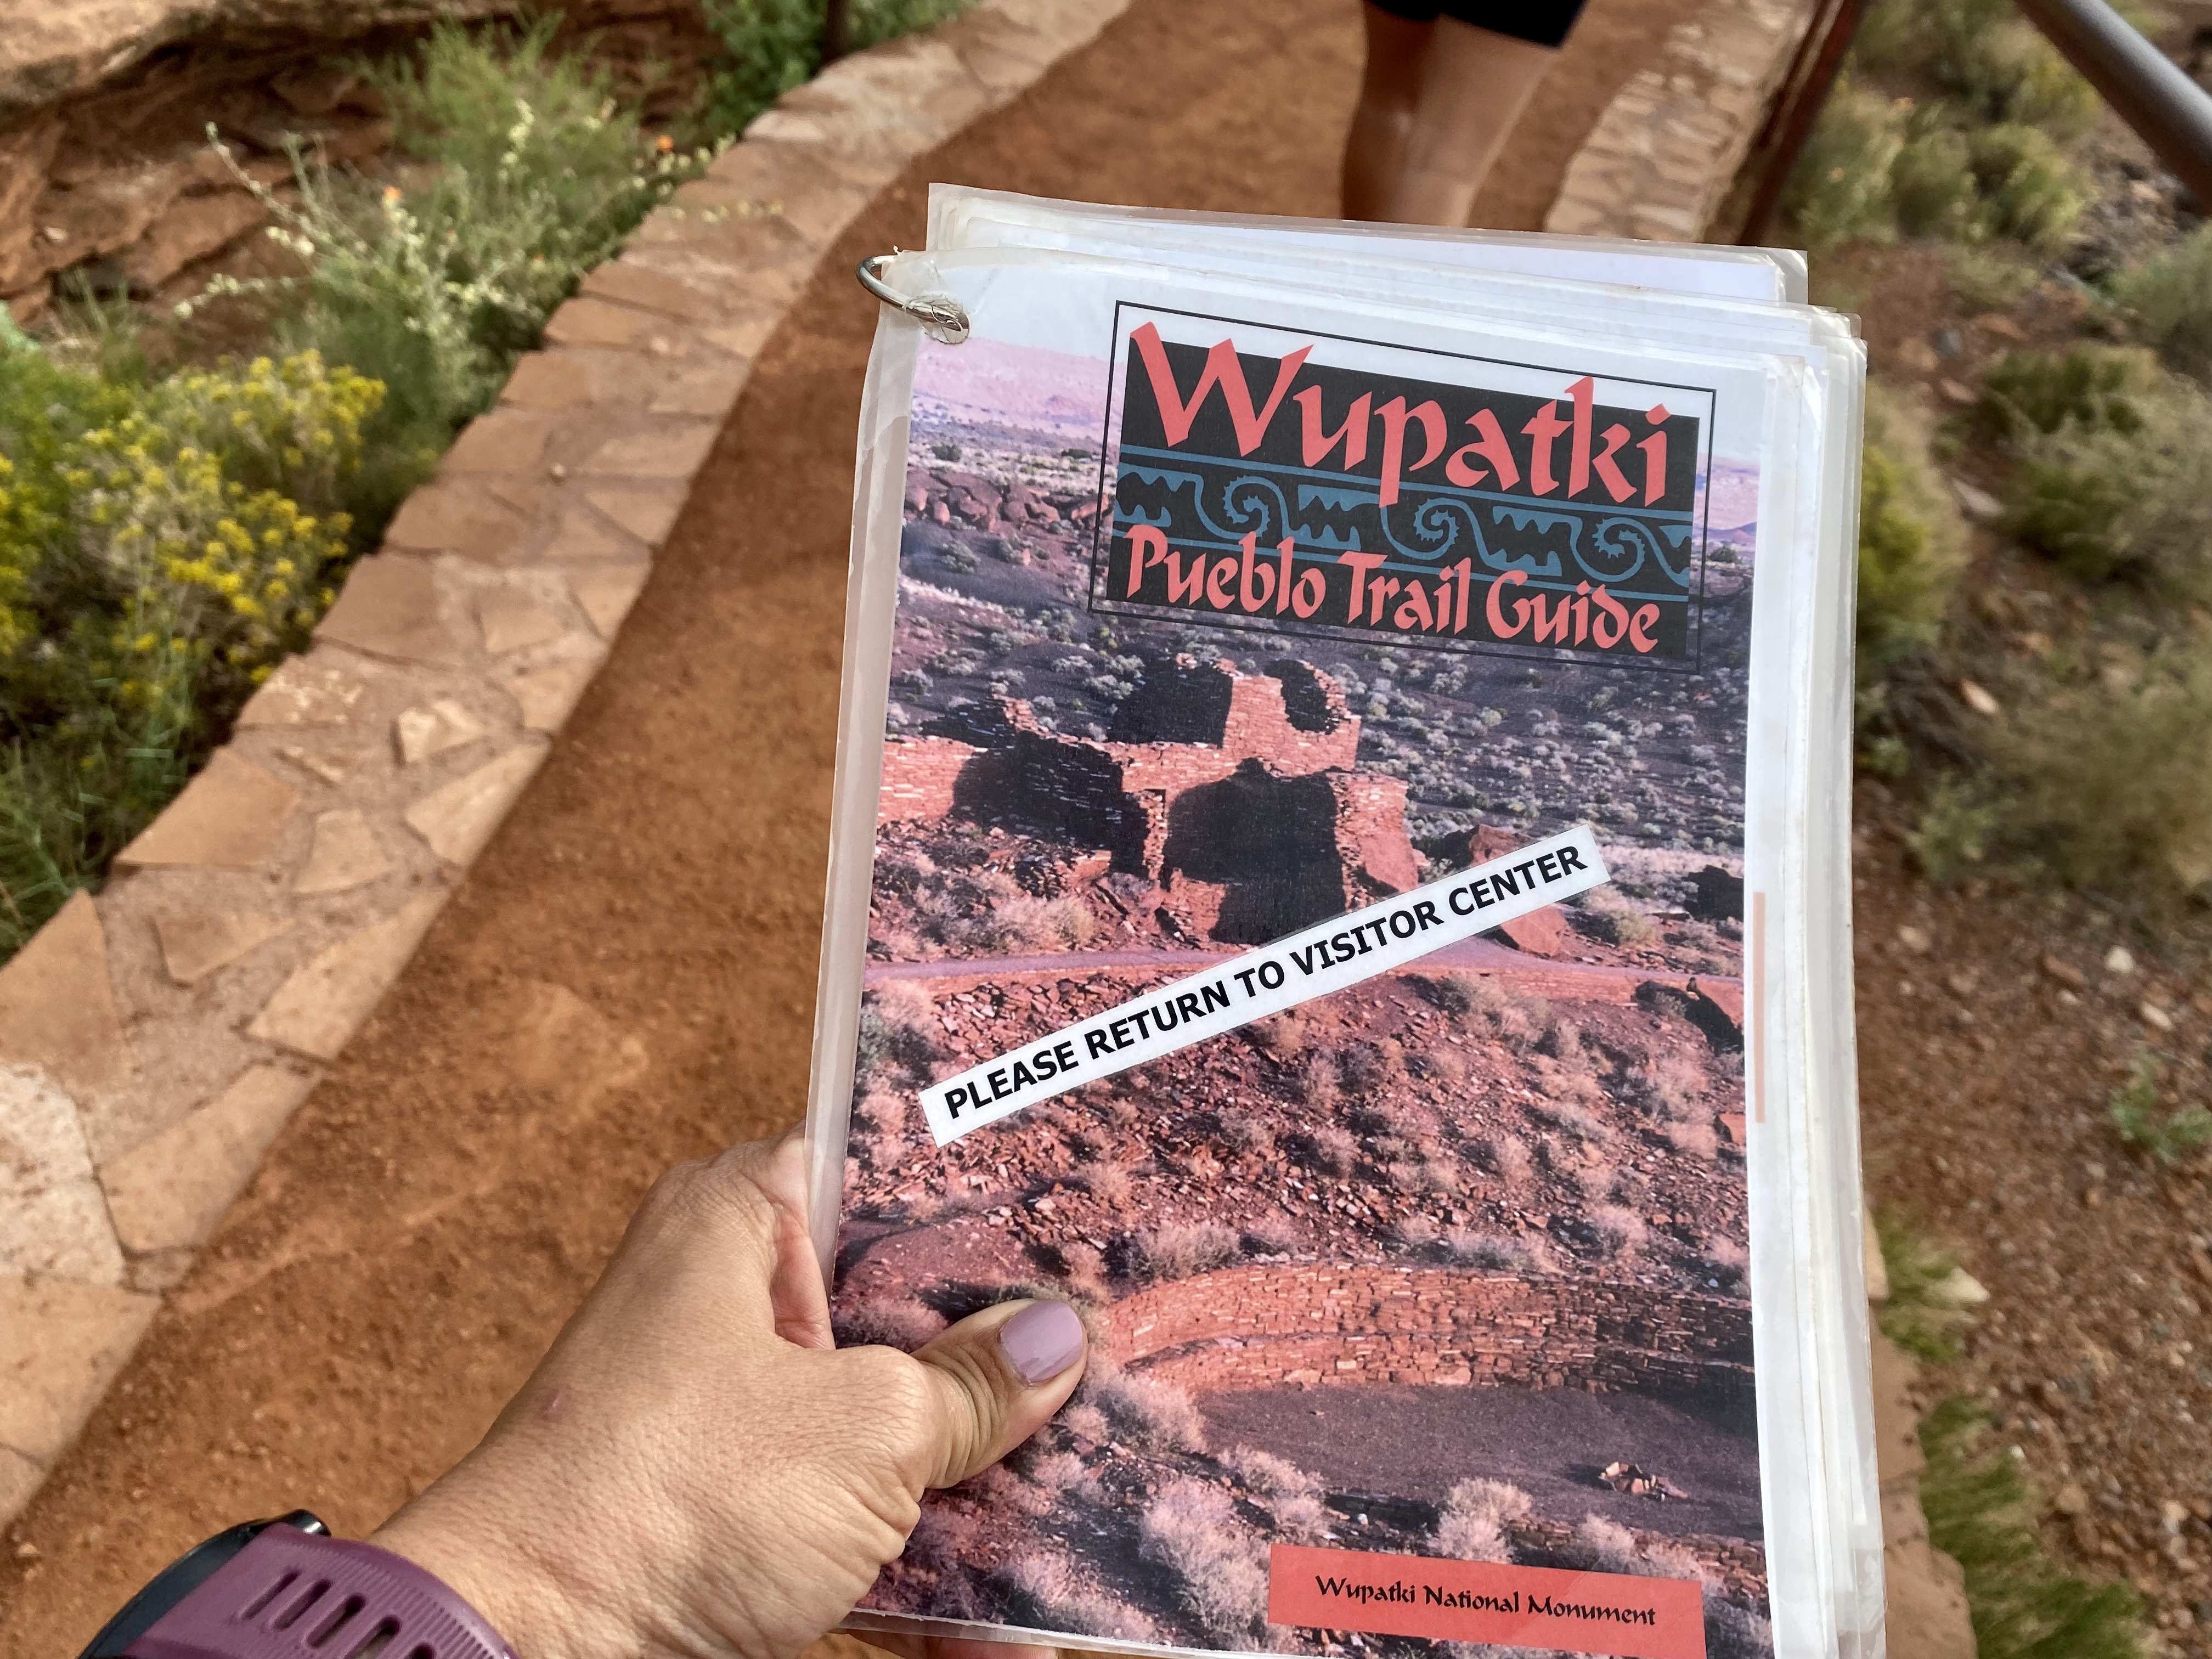 Wupatki Pueblo trail guide